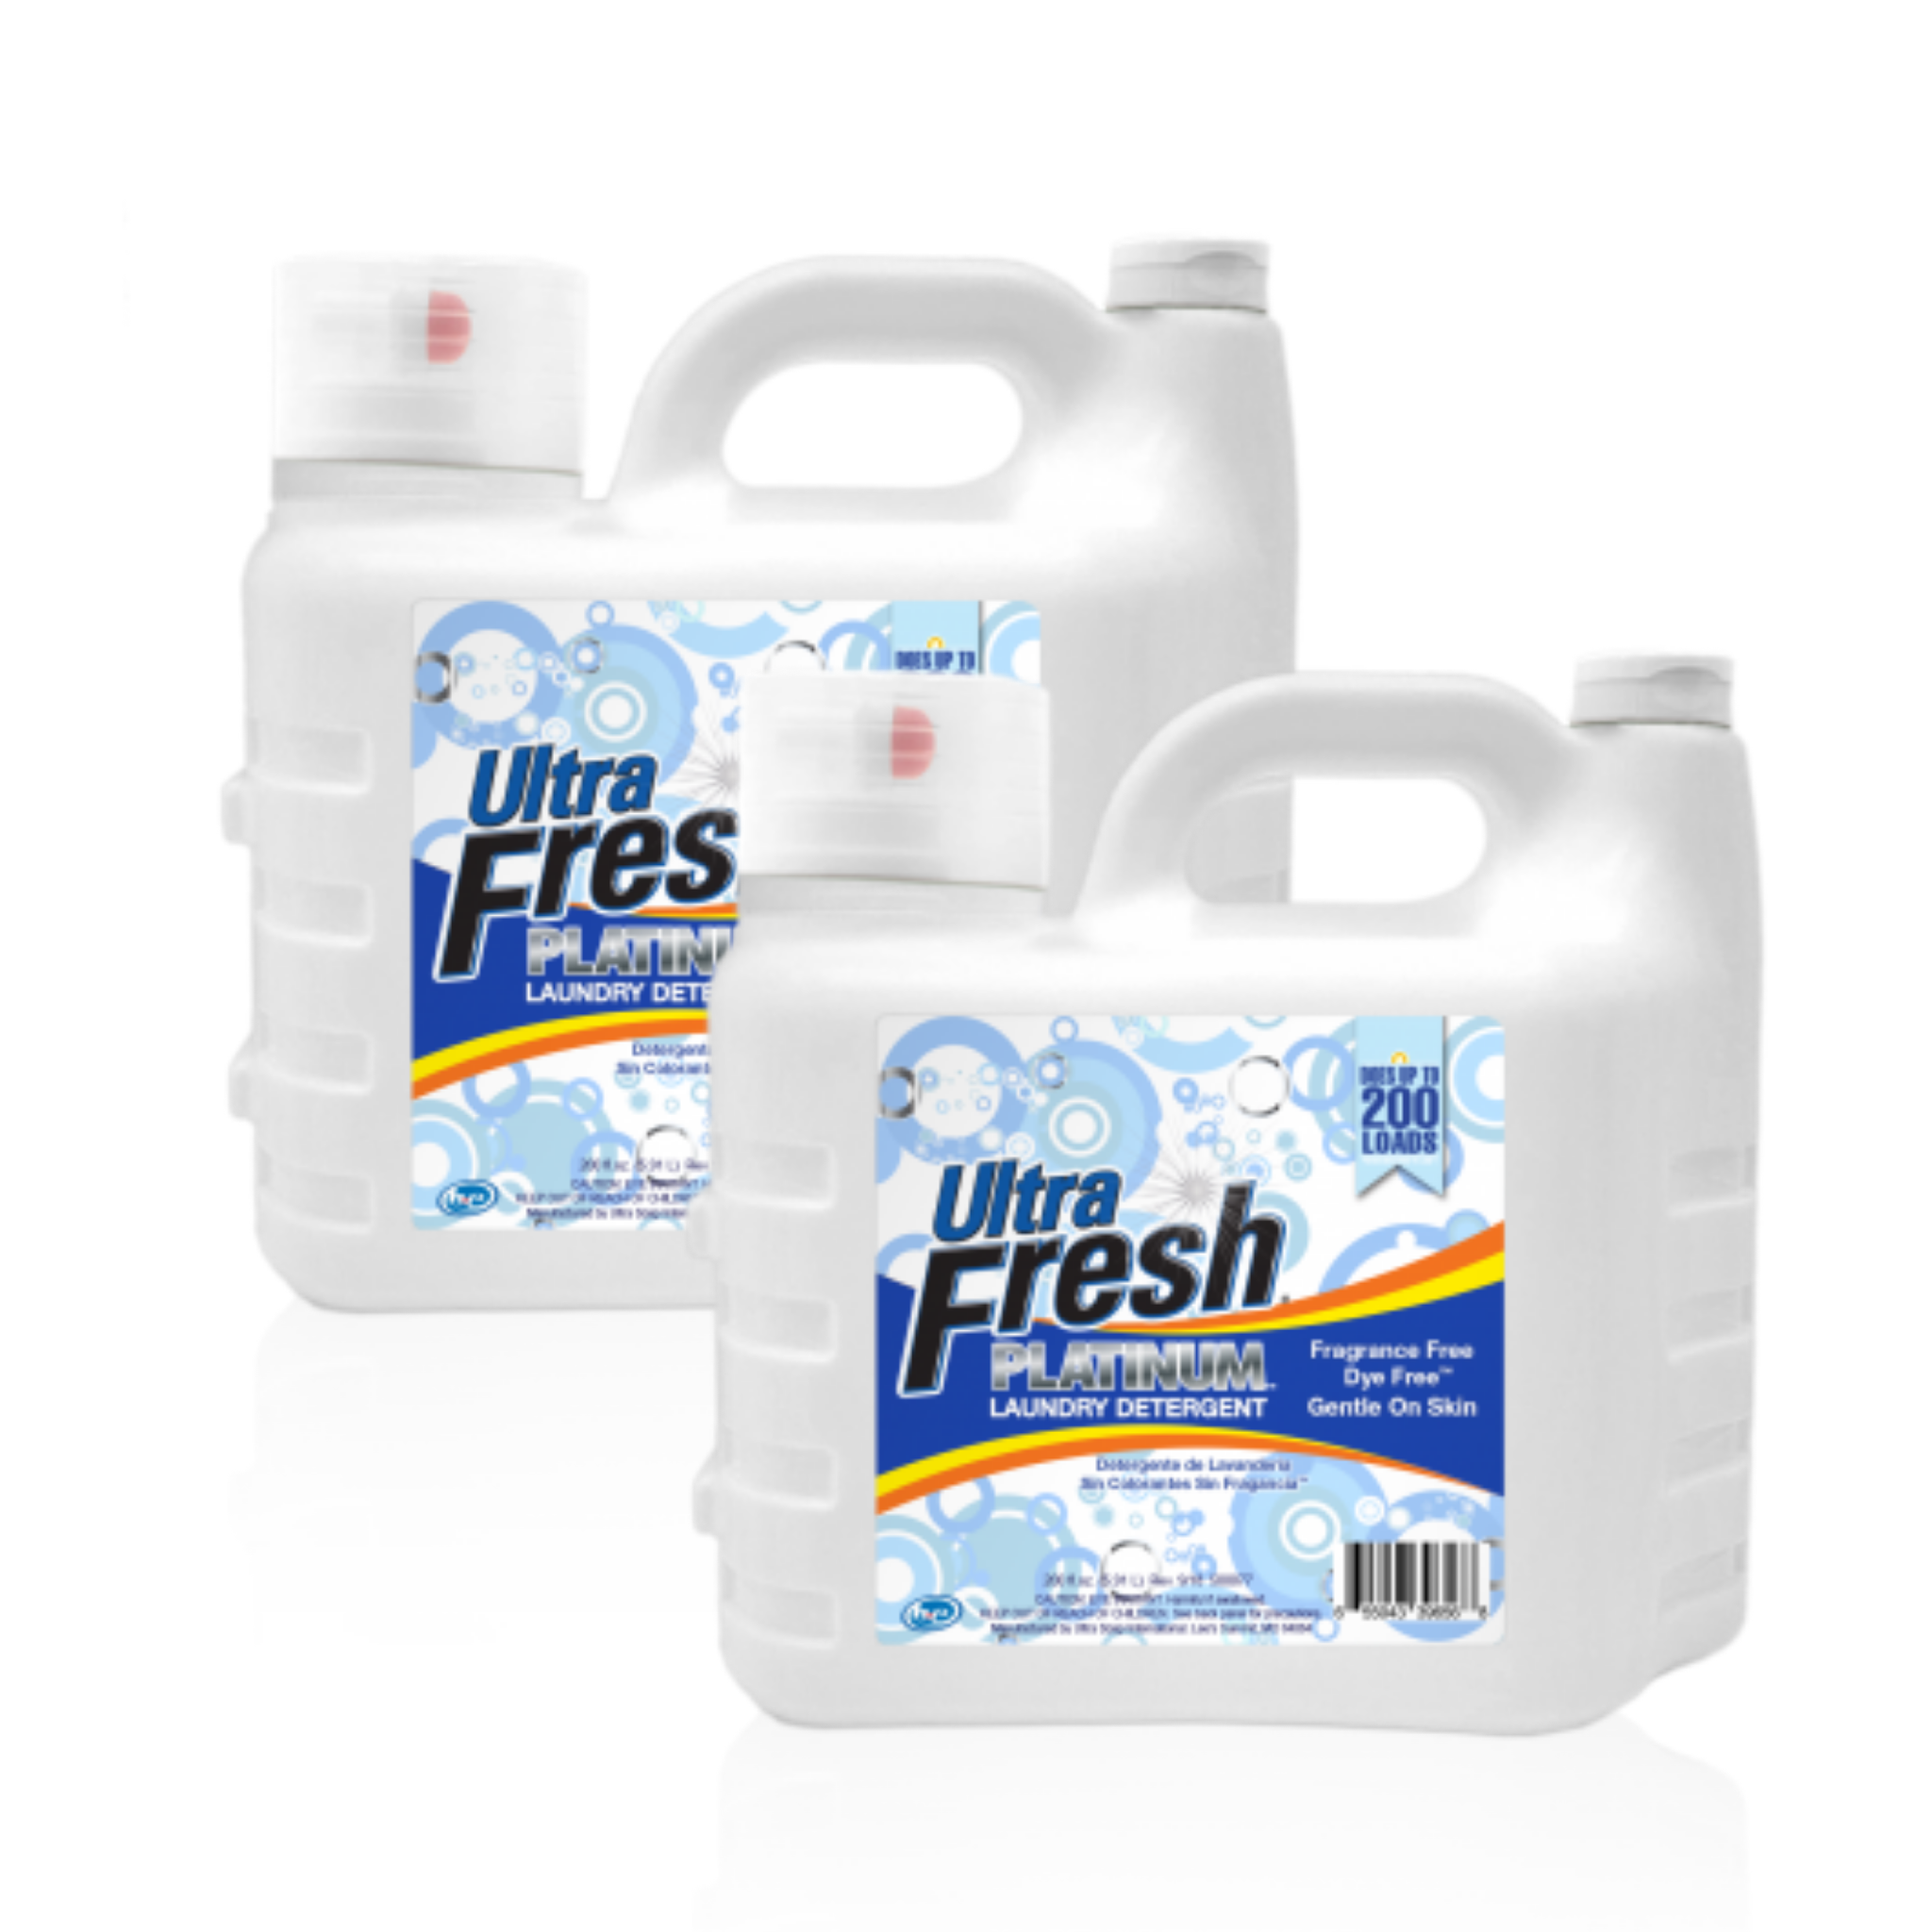 Ultra Fresh Platinum Fragrance Free & Dye Free 6X Laundry Detergent - 2x200 Ounce Club Pack